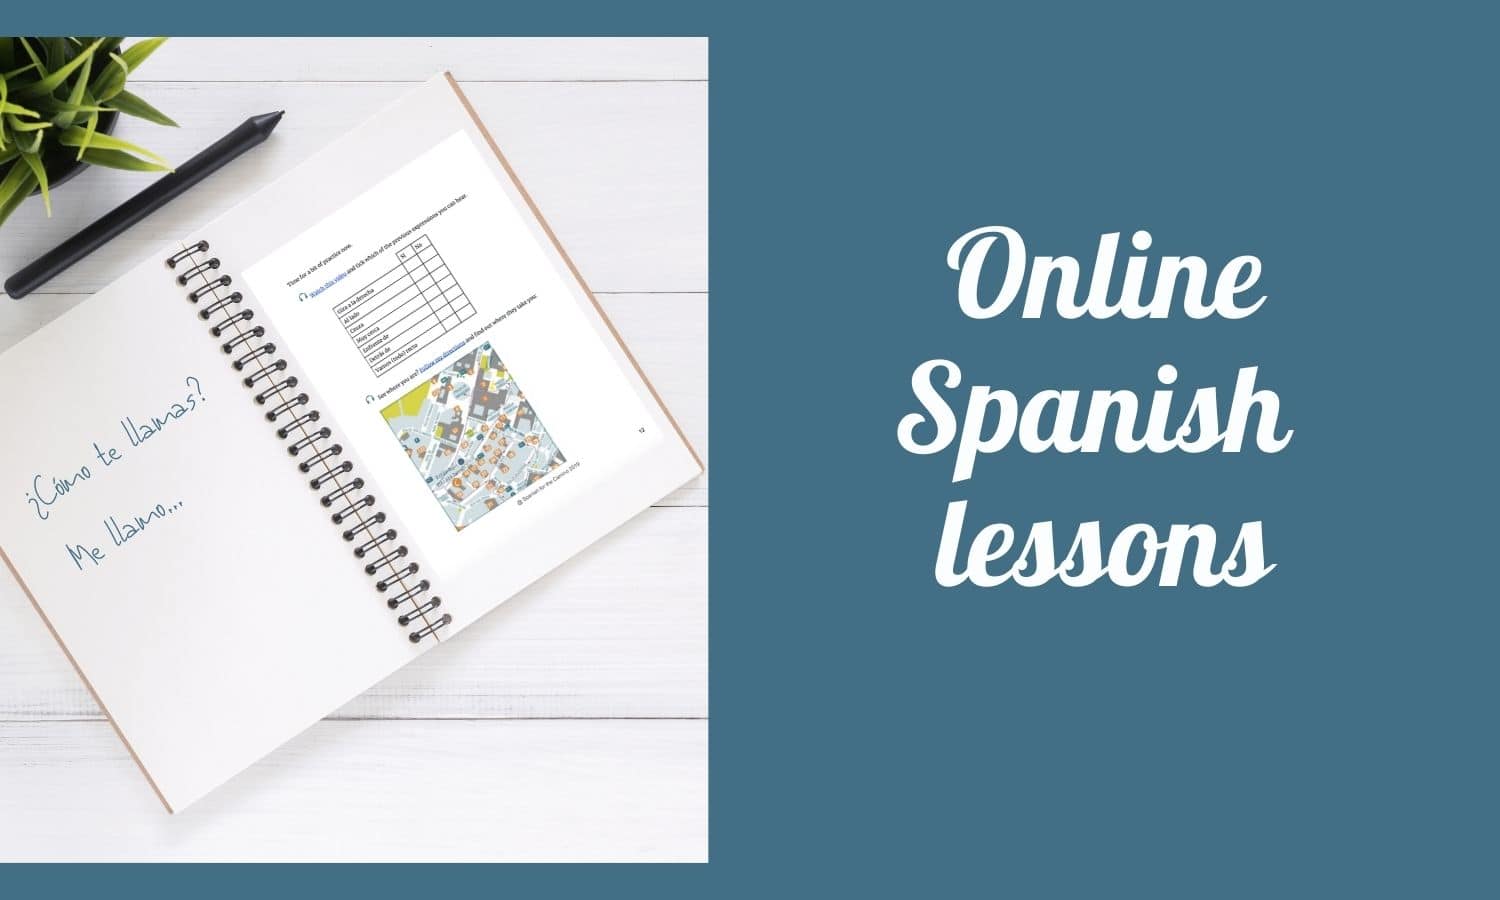 Online Spanish lessons